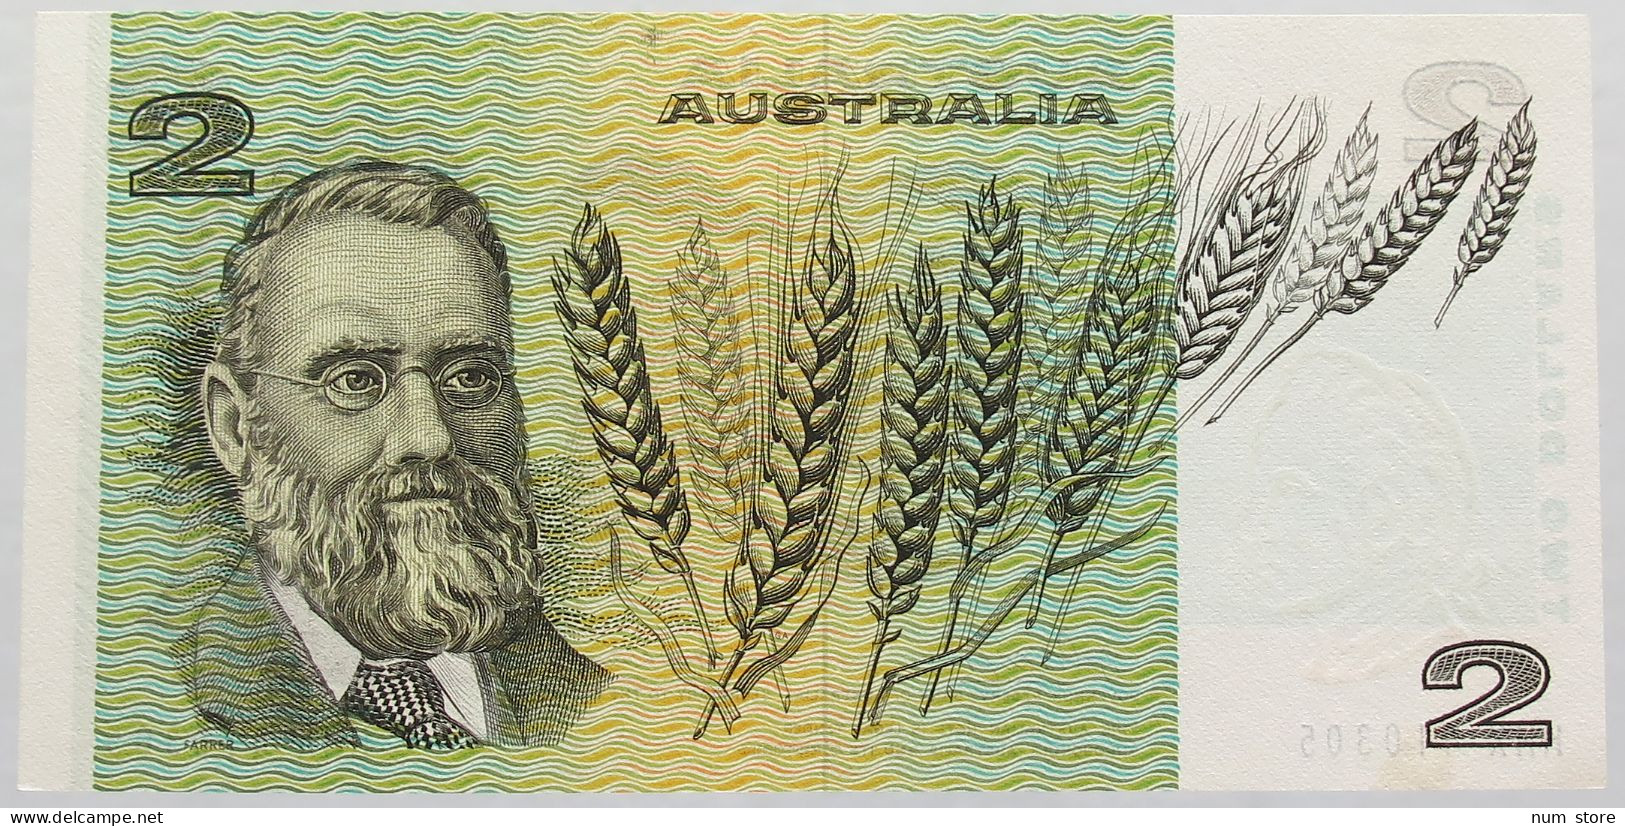 AUSTRALIA 2 DOLLARS 1983 TOP #alb016 0475 - 1974-94 Australia Reserve Bank